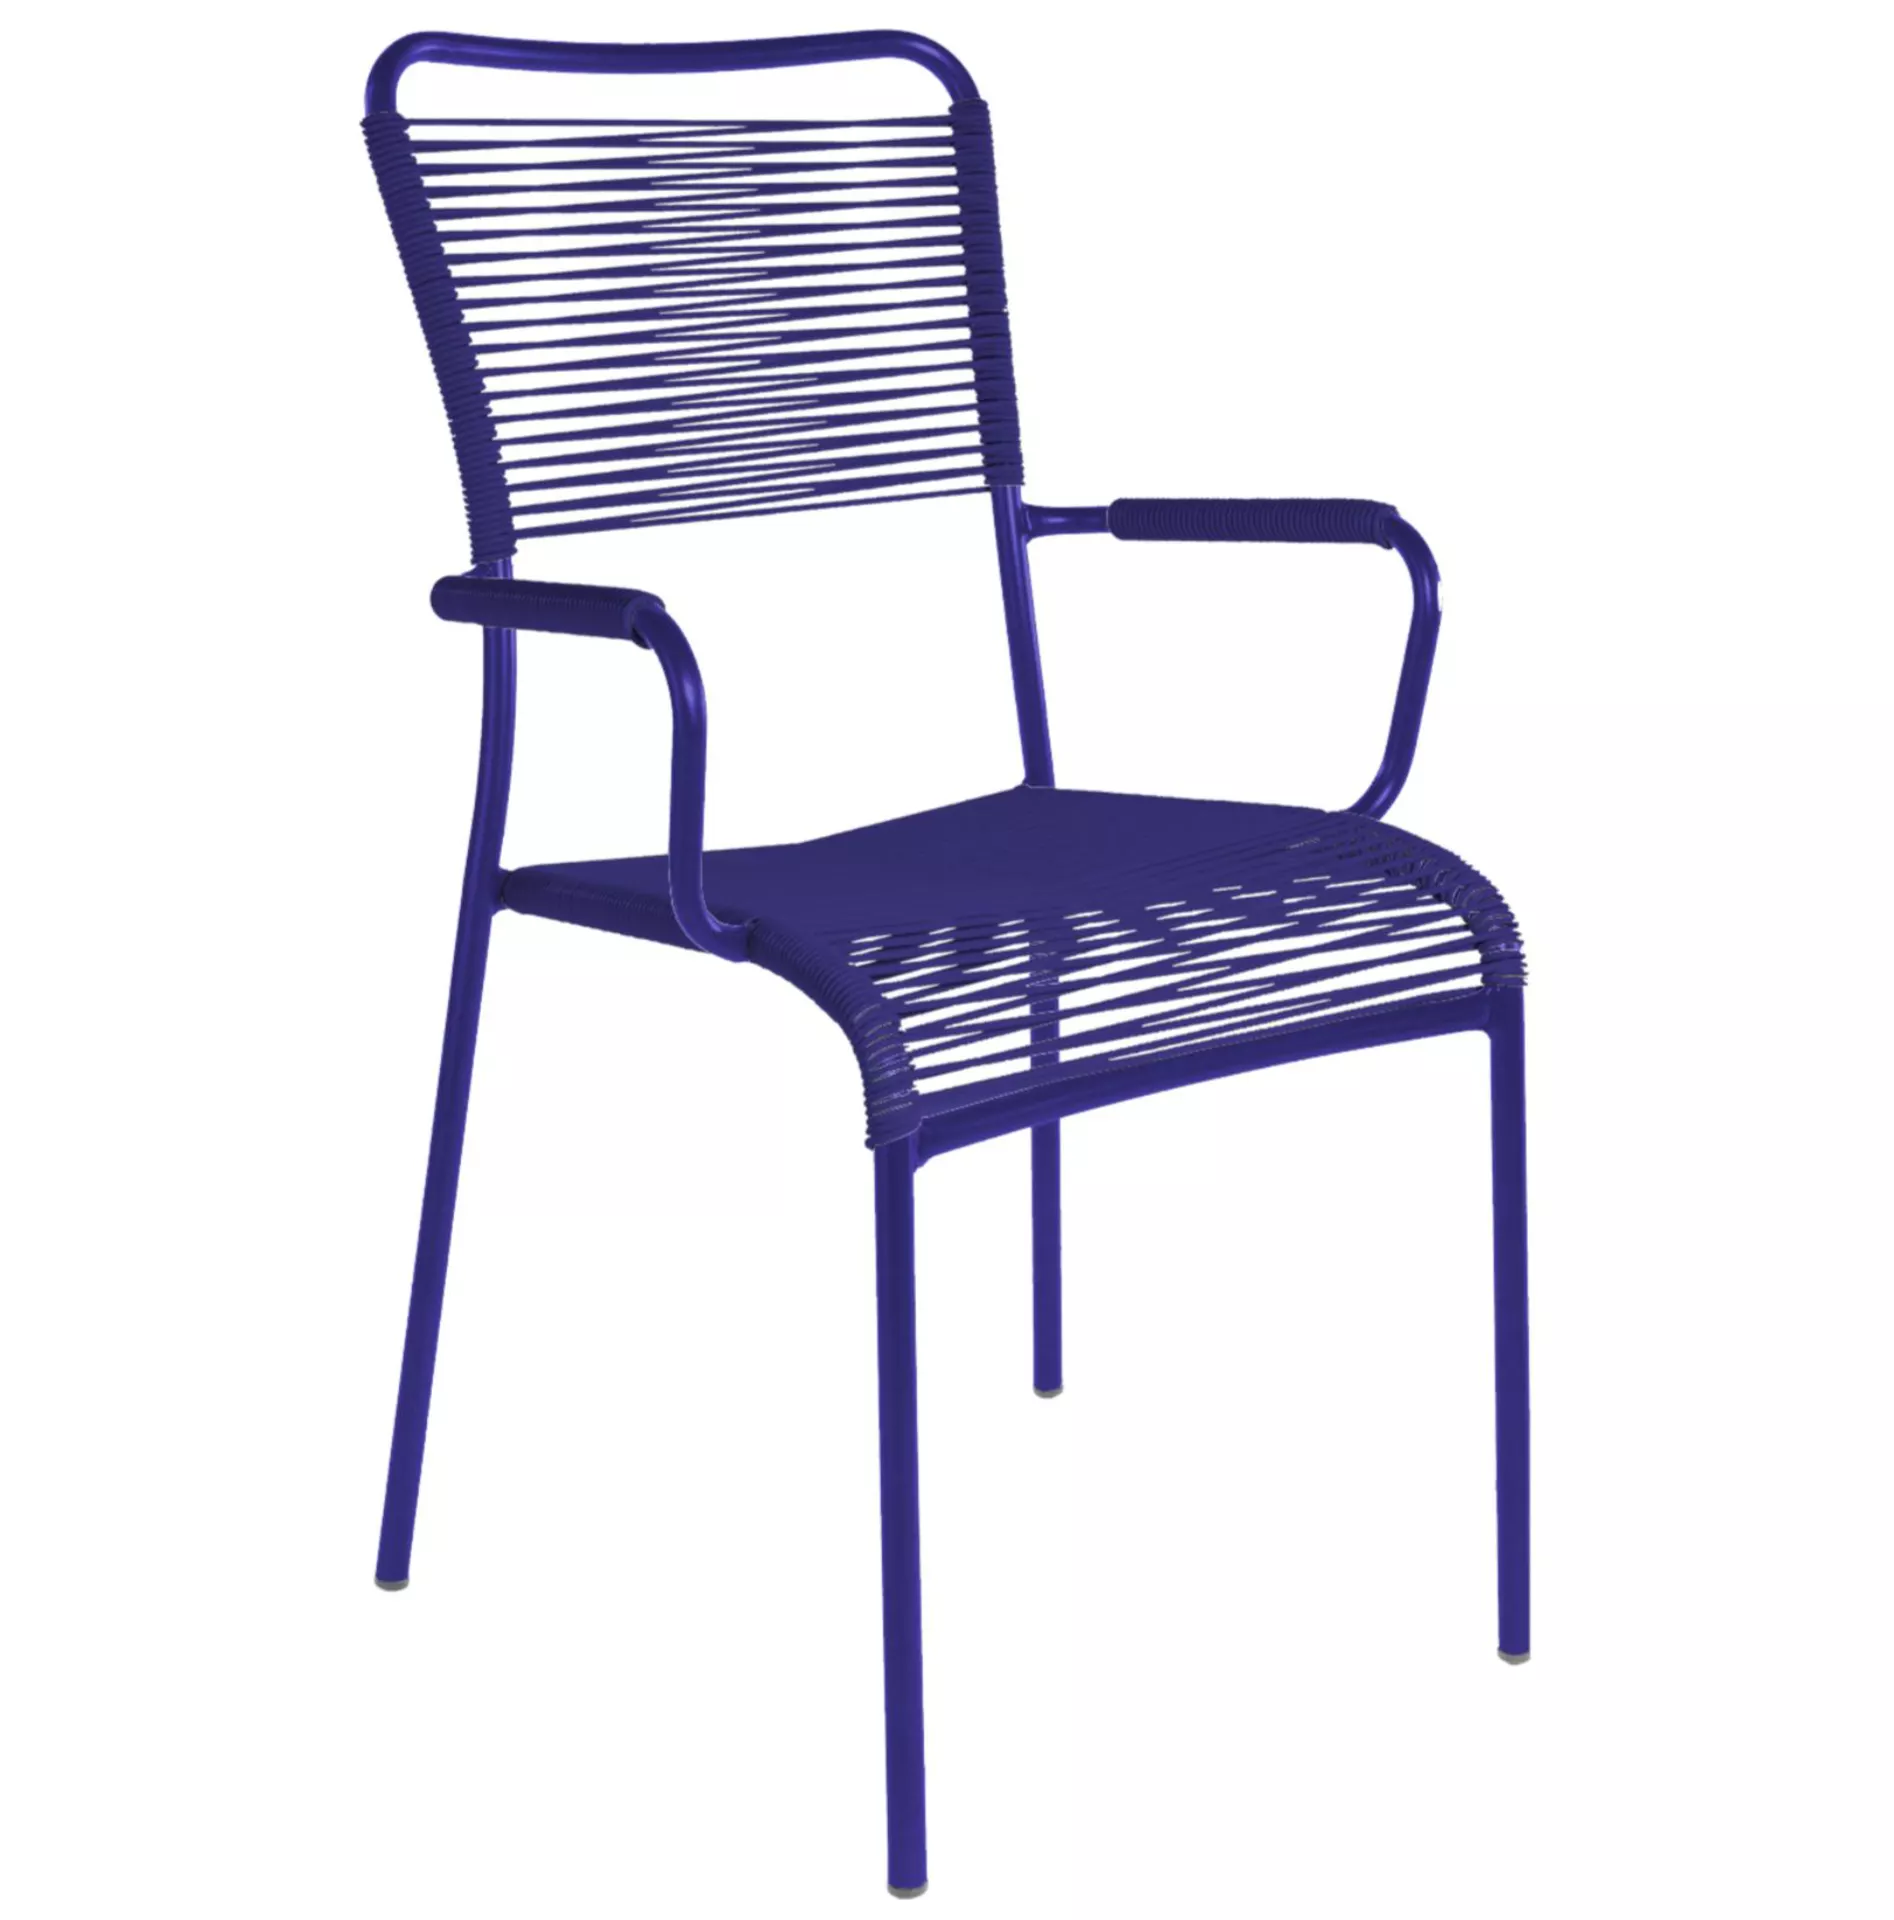 Spaghetti-Stuhl Mendrisio mit Armlehne Schaffner / Farbe: Kobaltblau